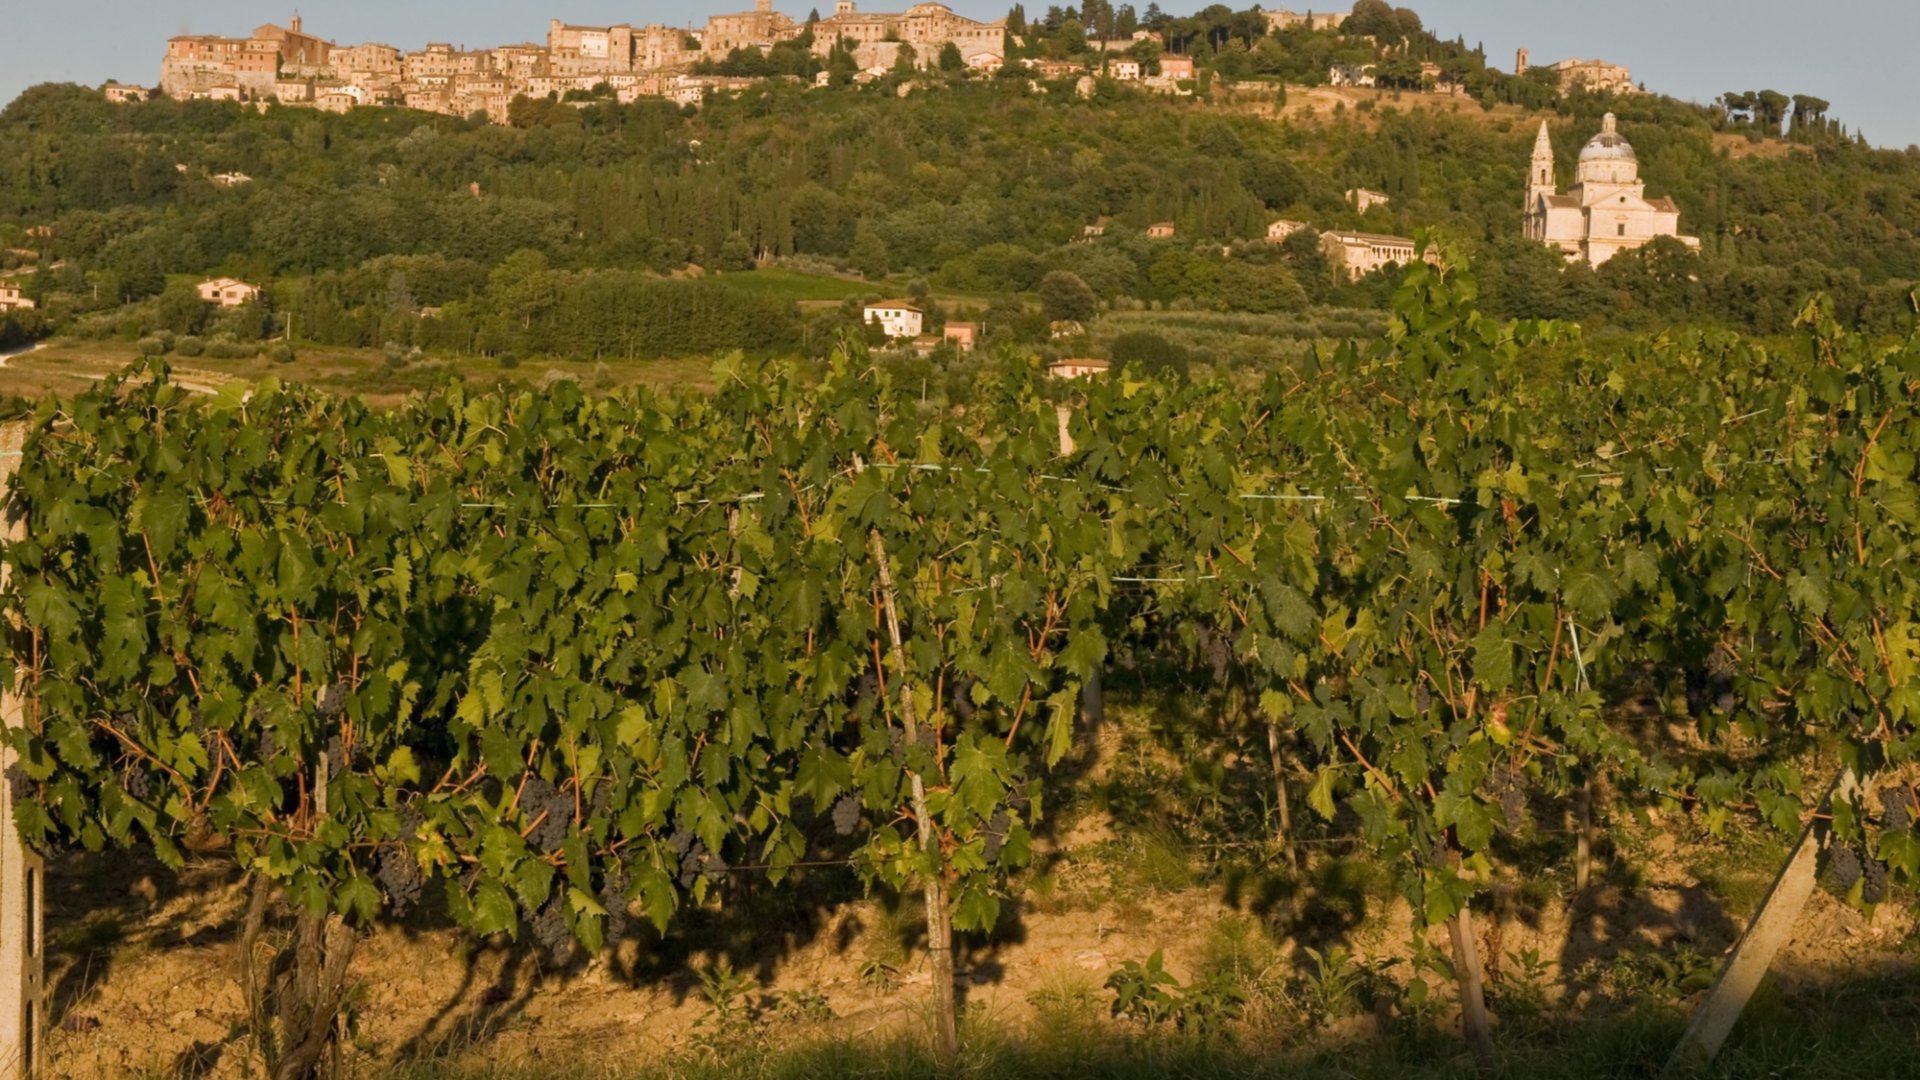 Montepulciano and its vineyards